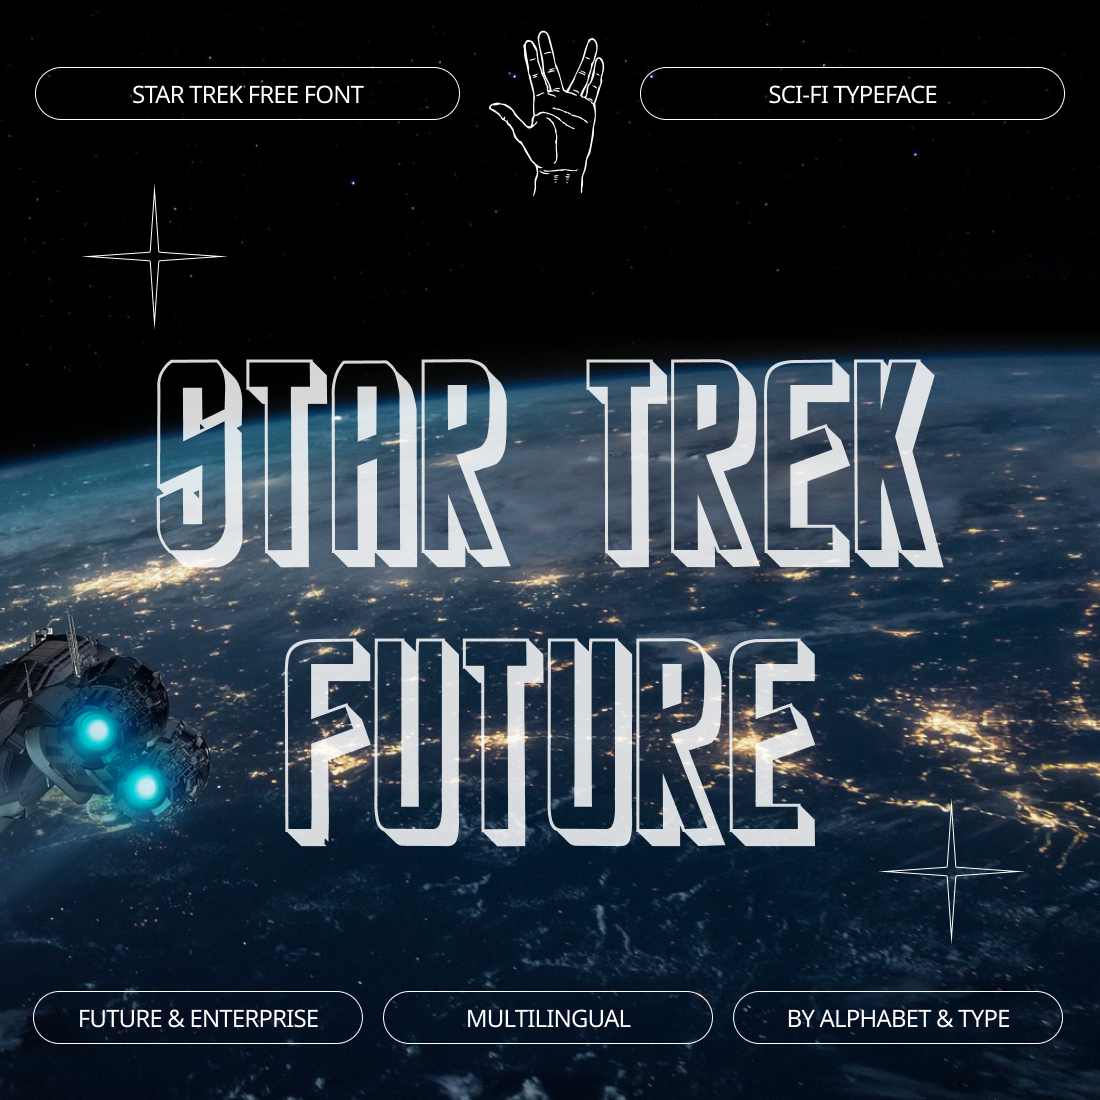 Star trek font free Introducing preview by MasterBundles.